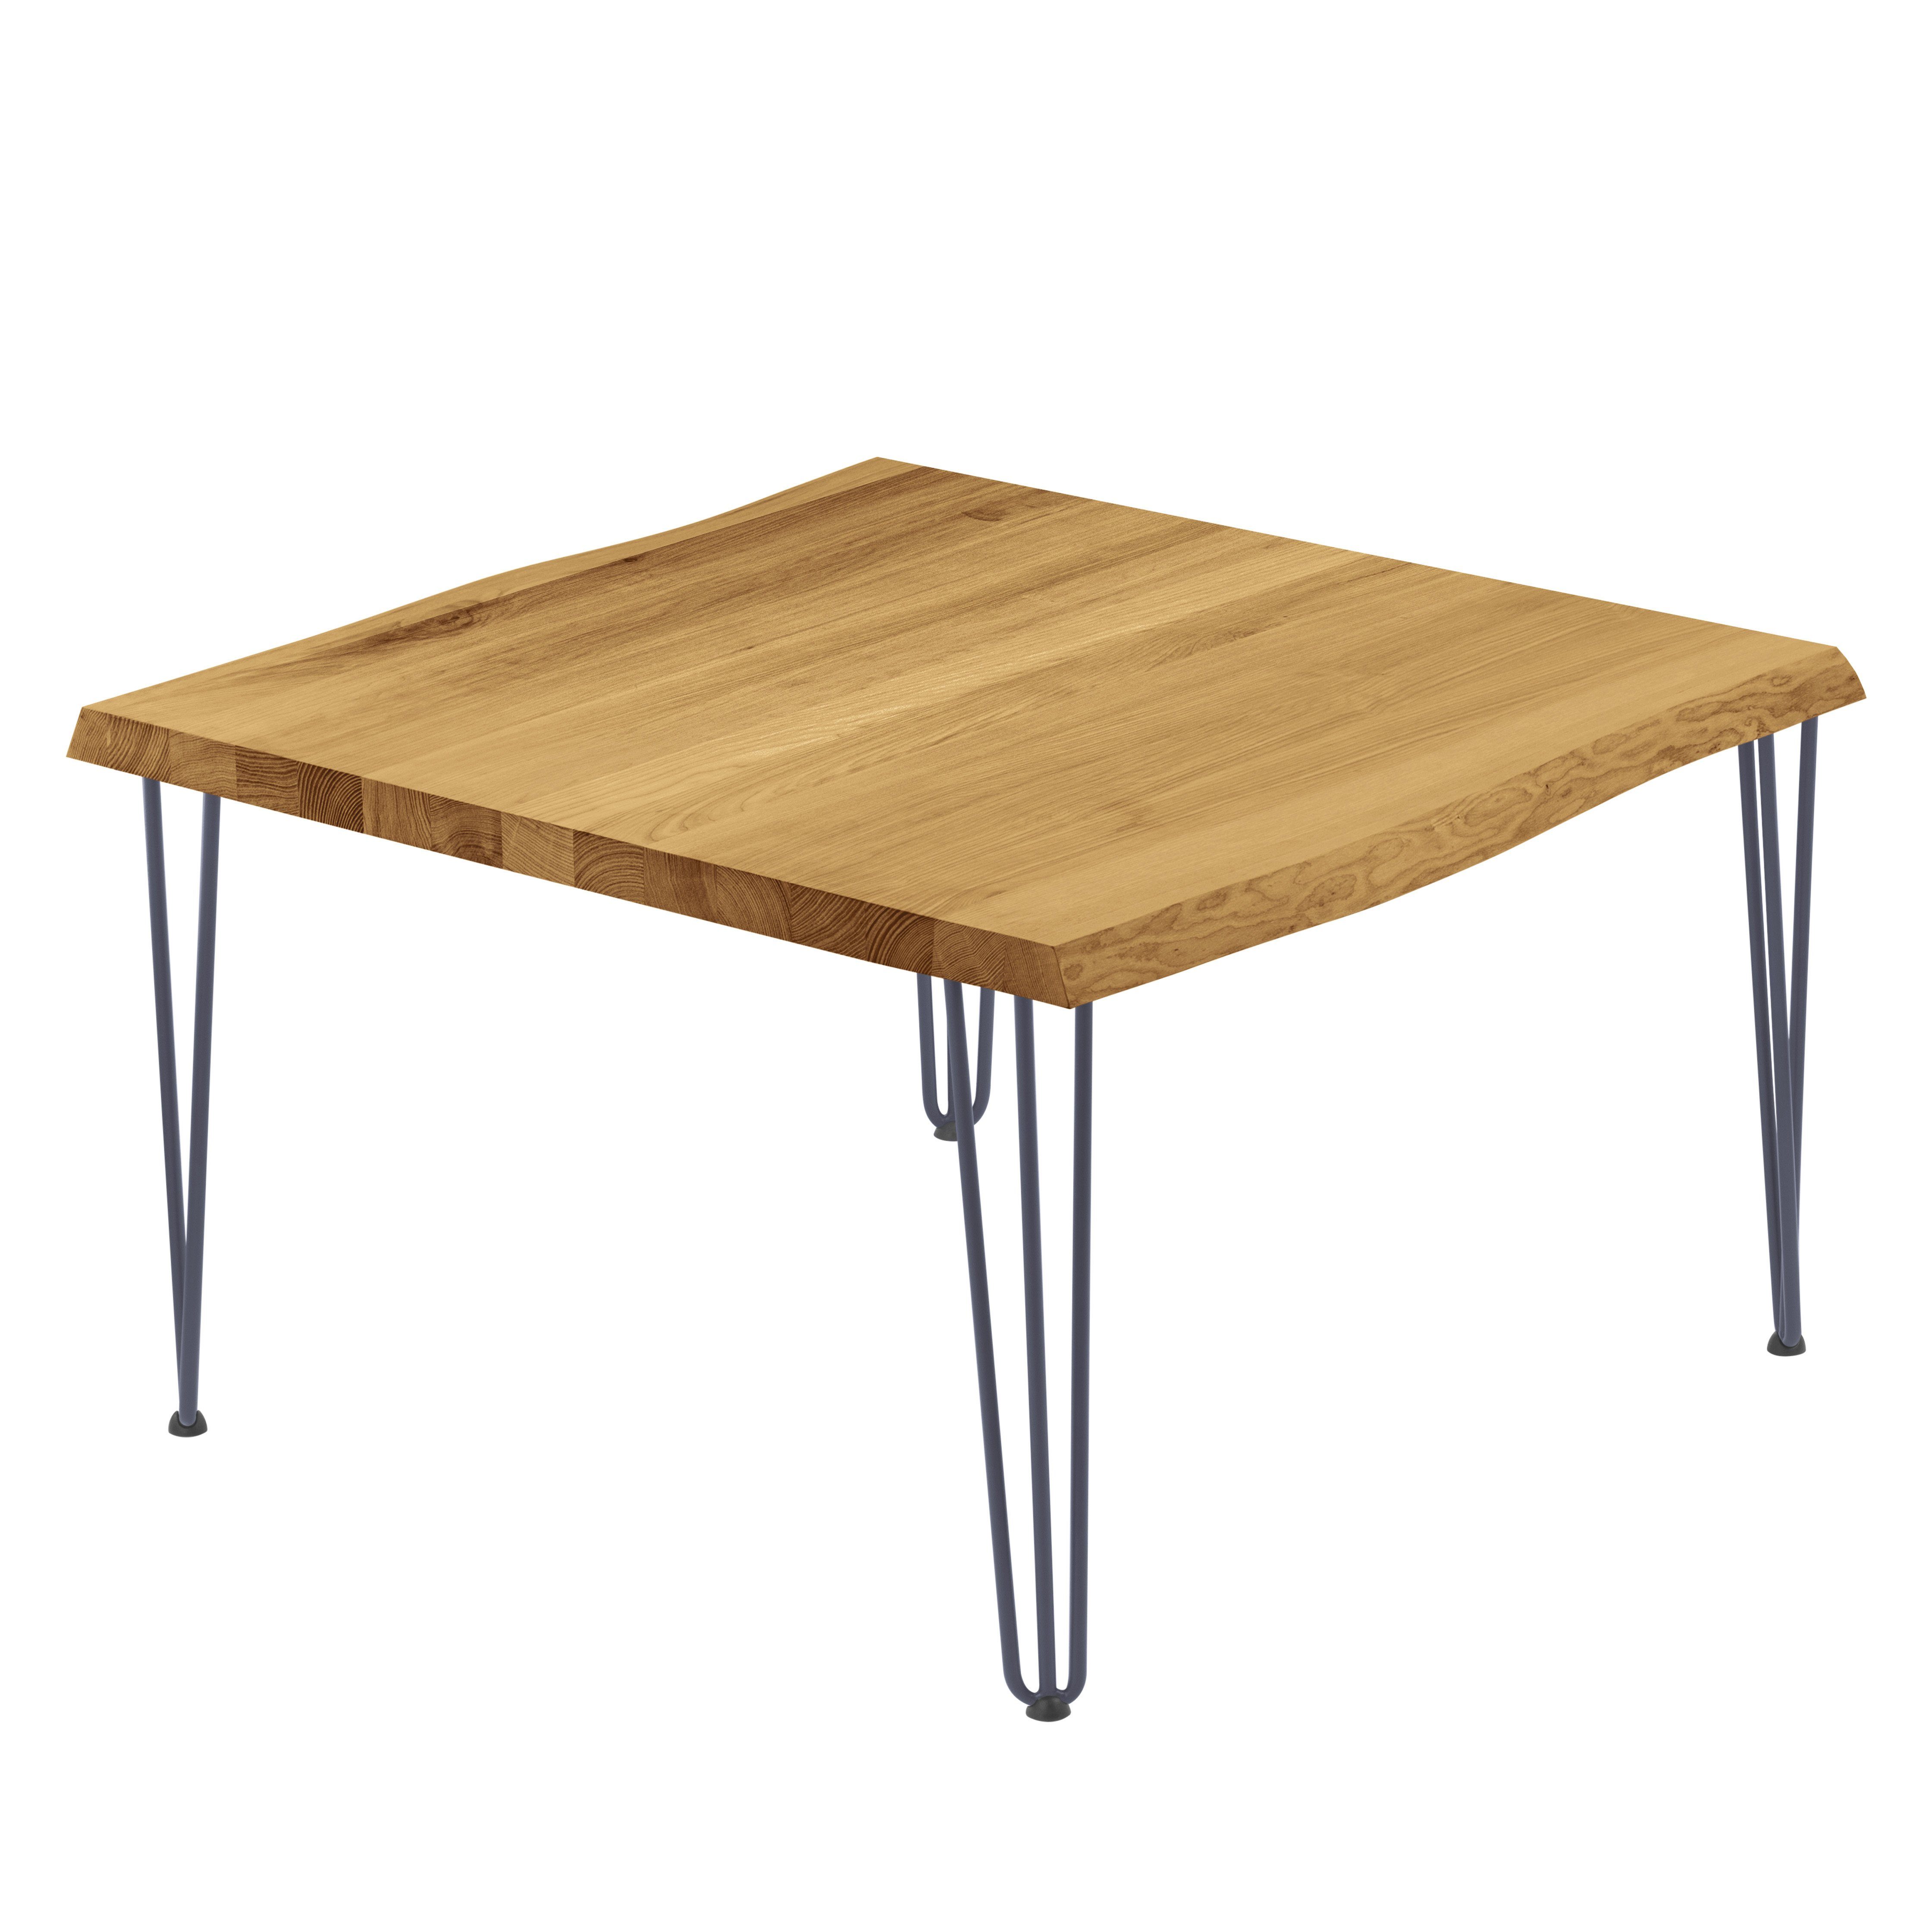 | Metallgestell Massivholz Tisch), LAMO Manufaktur inkl. Baumkante Esstisch Baumkantentisch (1 Creative massiv Rustikal Anthrazit